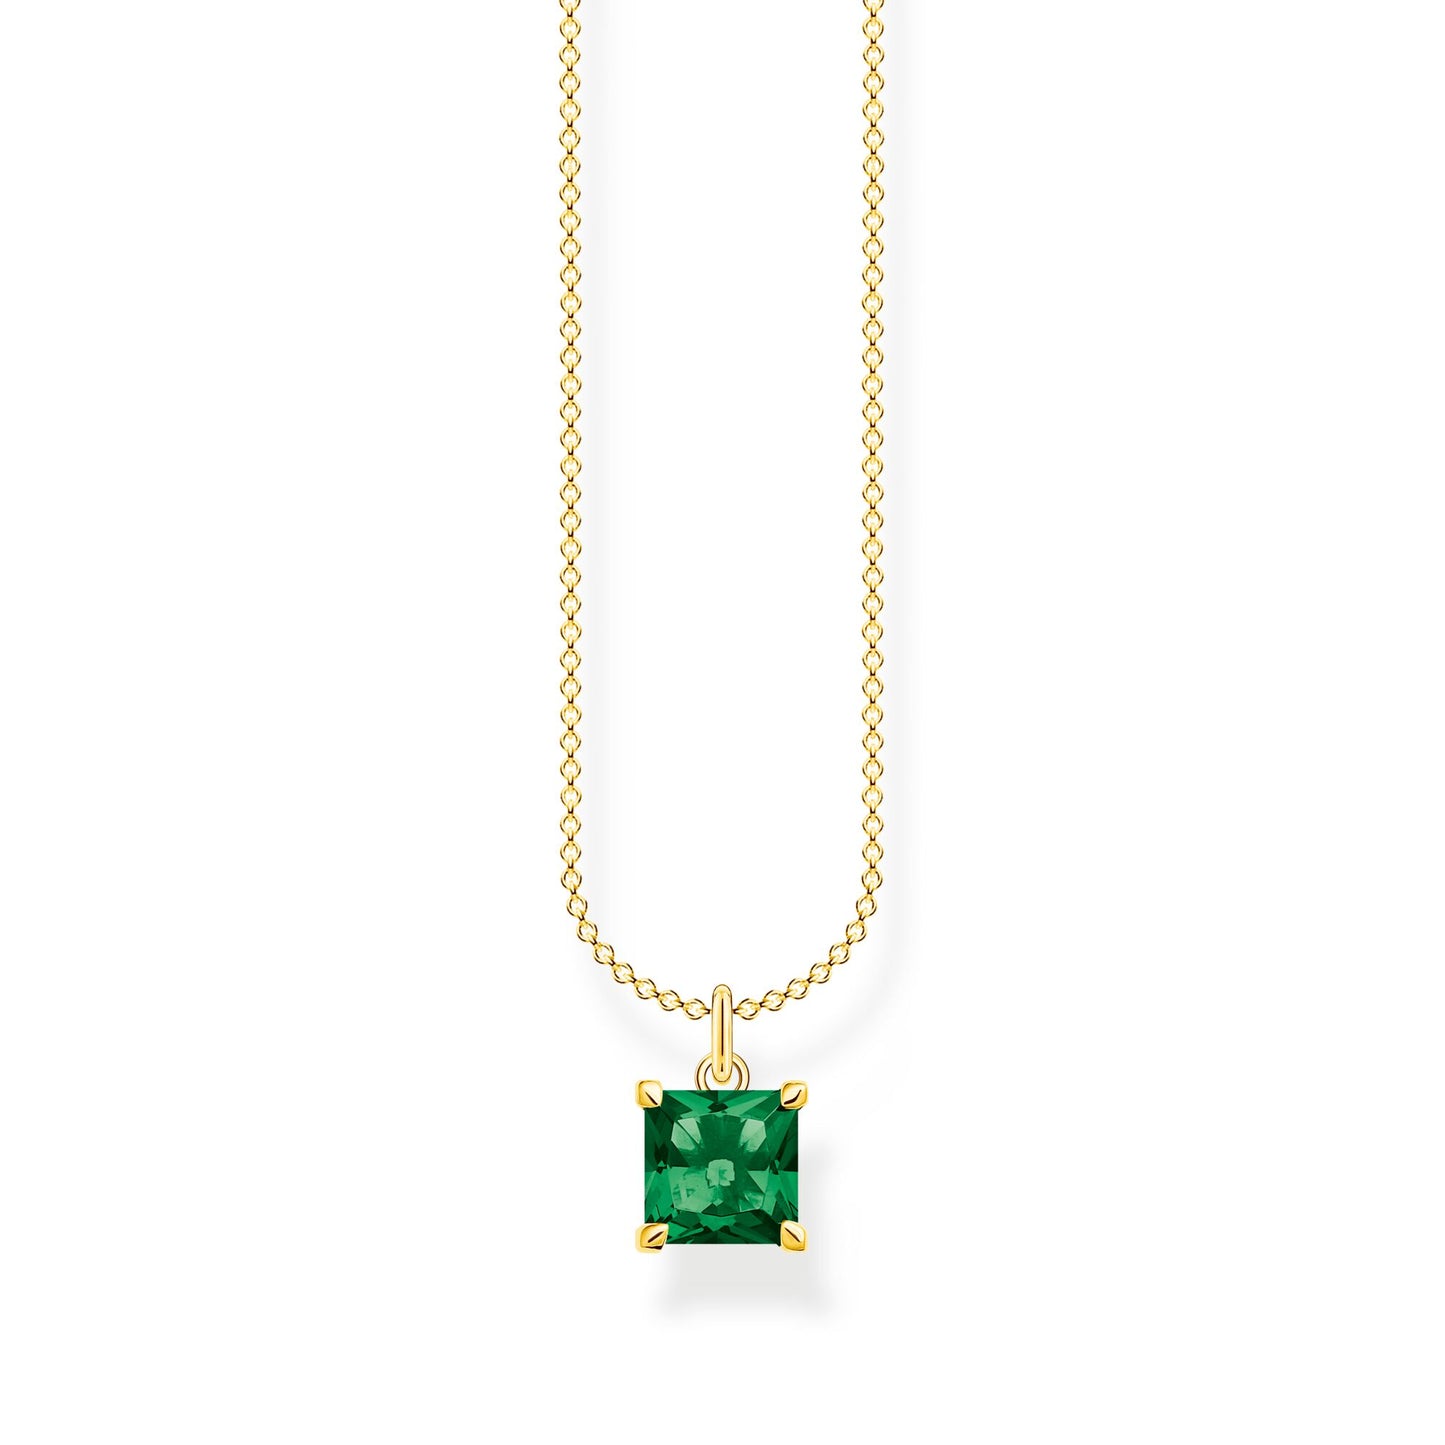 Thomas Sabo Necklace With Green Stone Gold KE2156-472-6